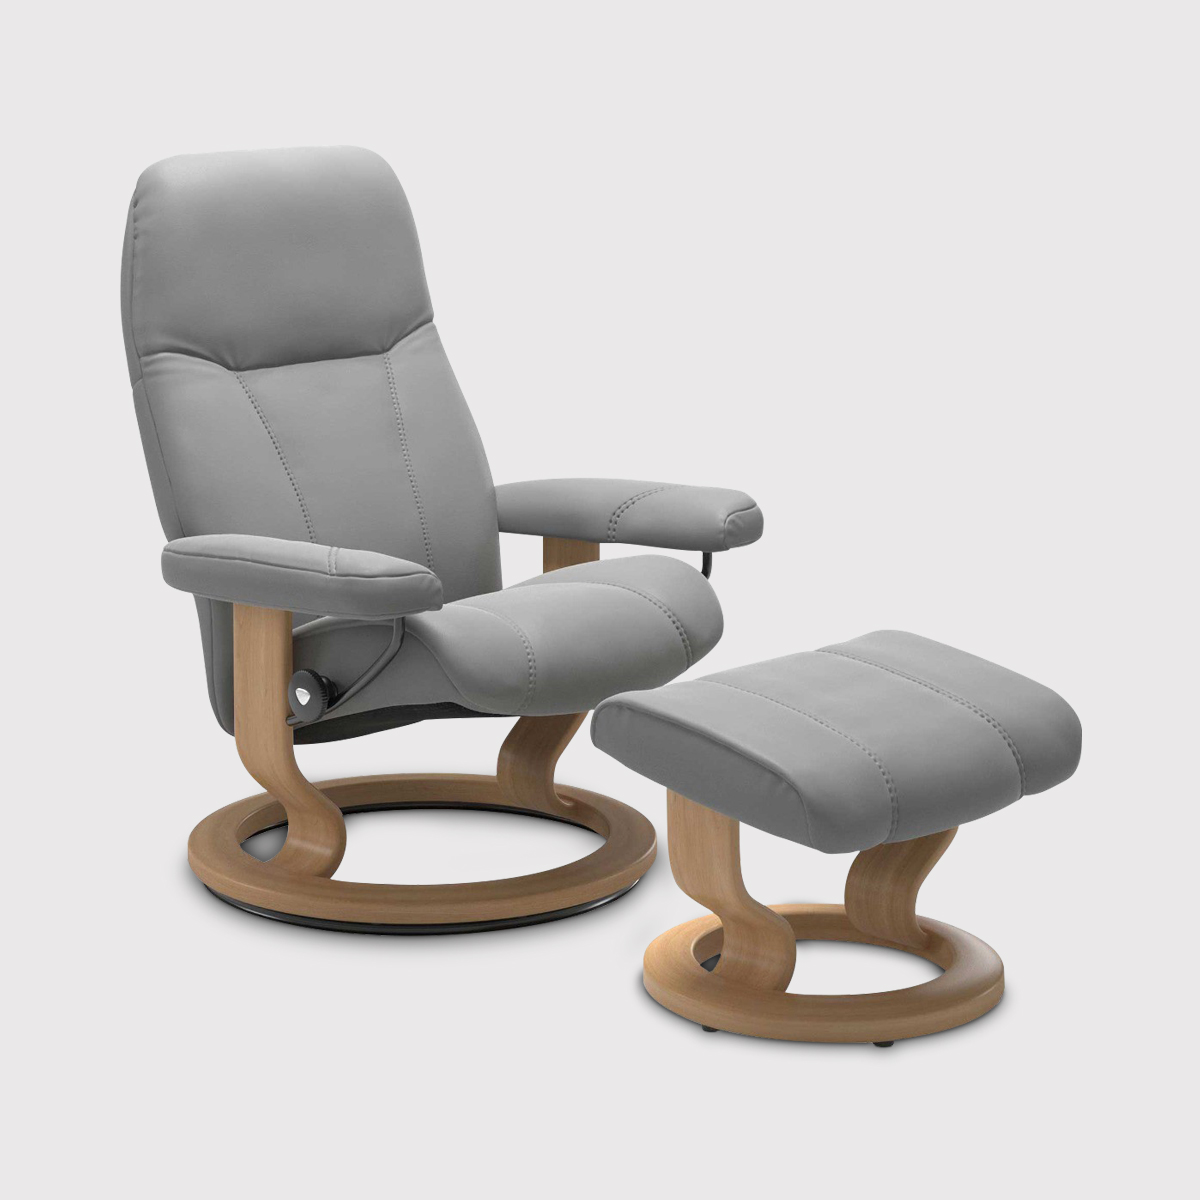 Stressless Consul Medium Recliner Chair & Footstool Quickship, Grey Leather | Barker & Stonehouse